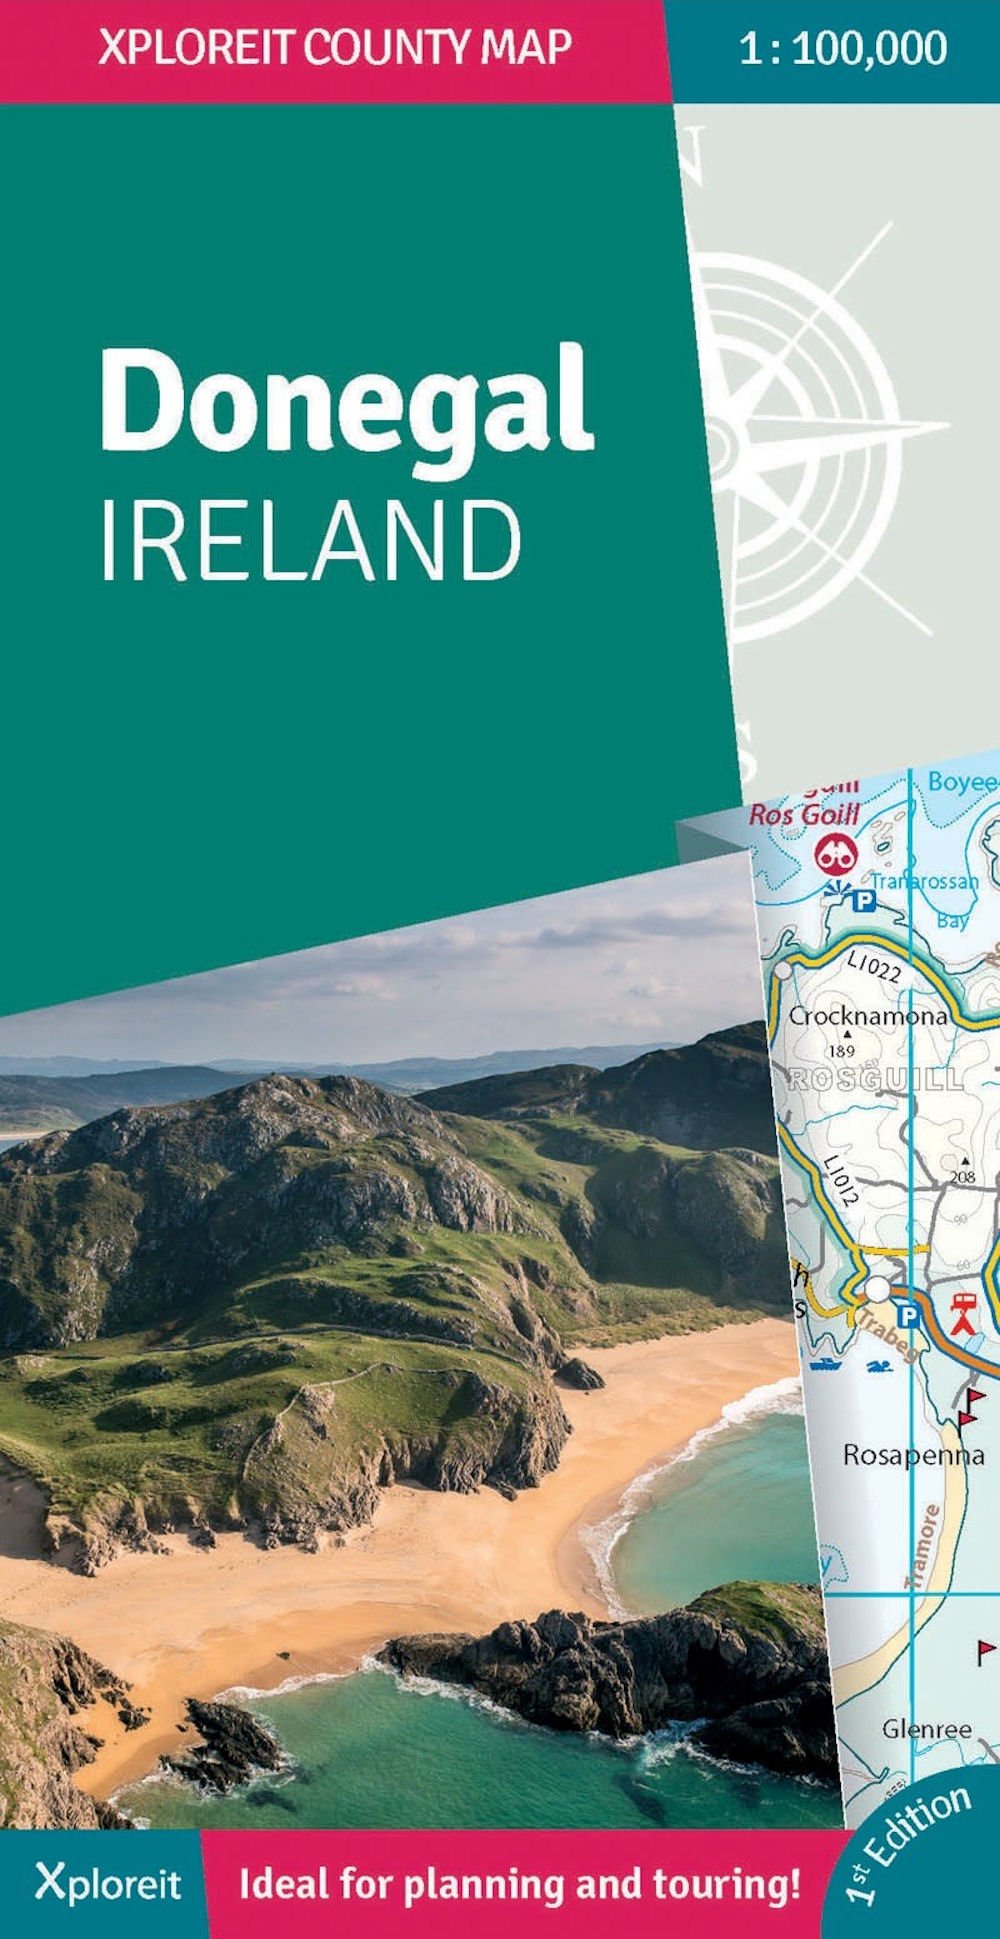 Donegal Ireland 2018: Xploreit County Map